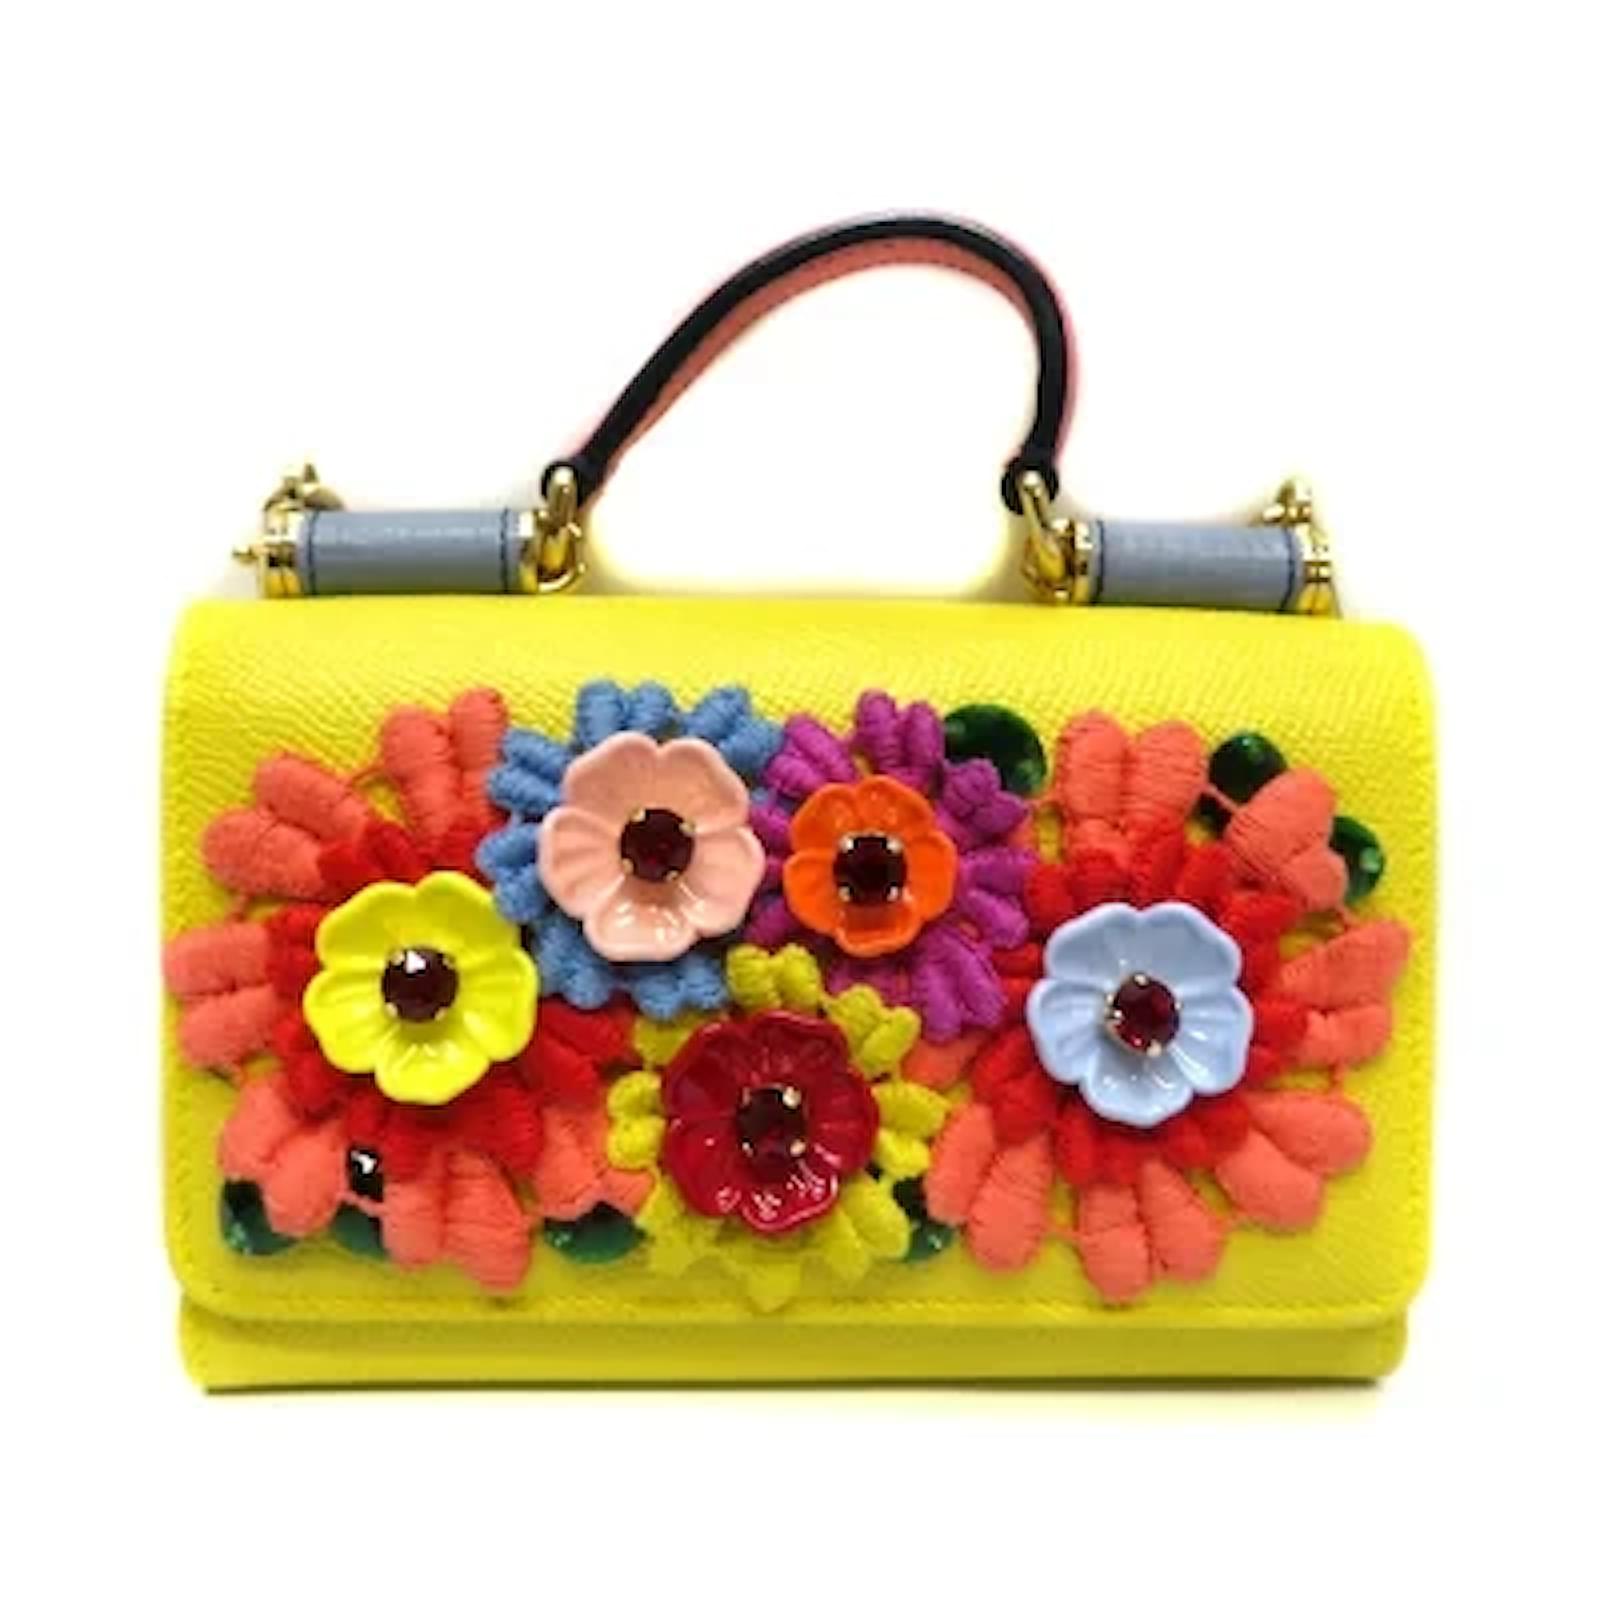 Dolce & Gabbana Handbags on Sale